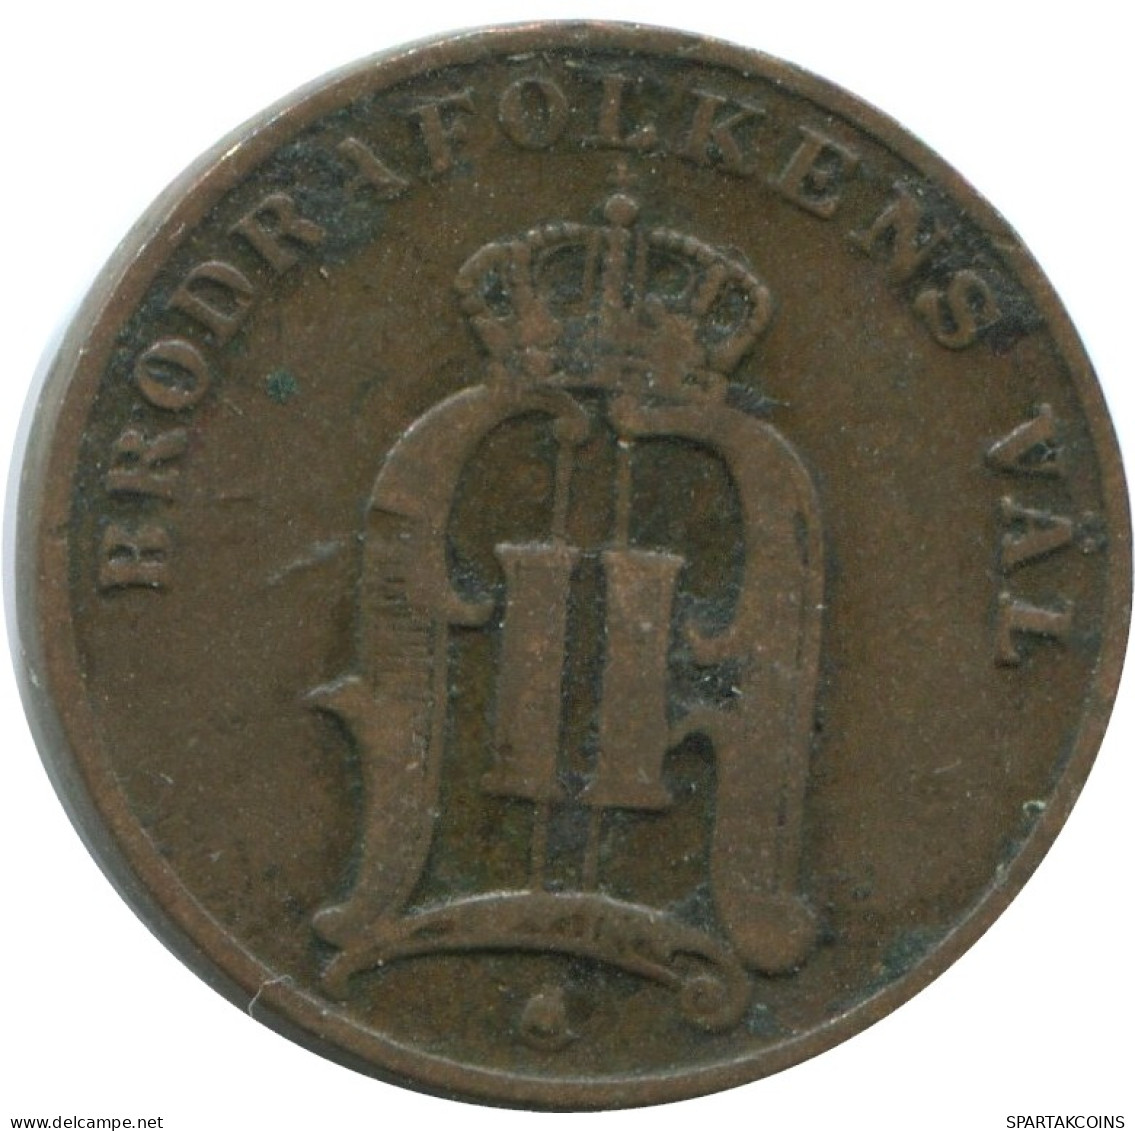 1 ORE 1891 SWEDEN Coin #AD377.2.U.A - Suède